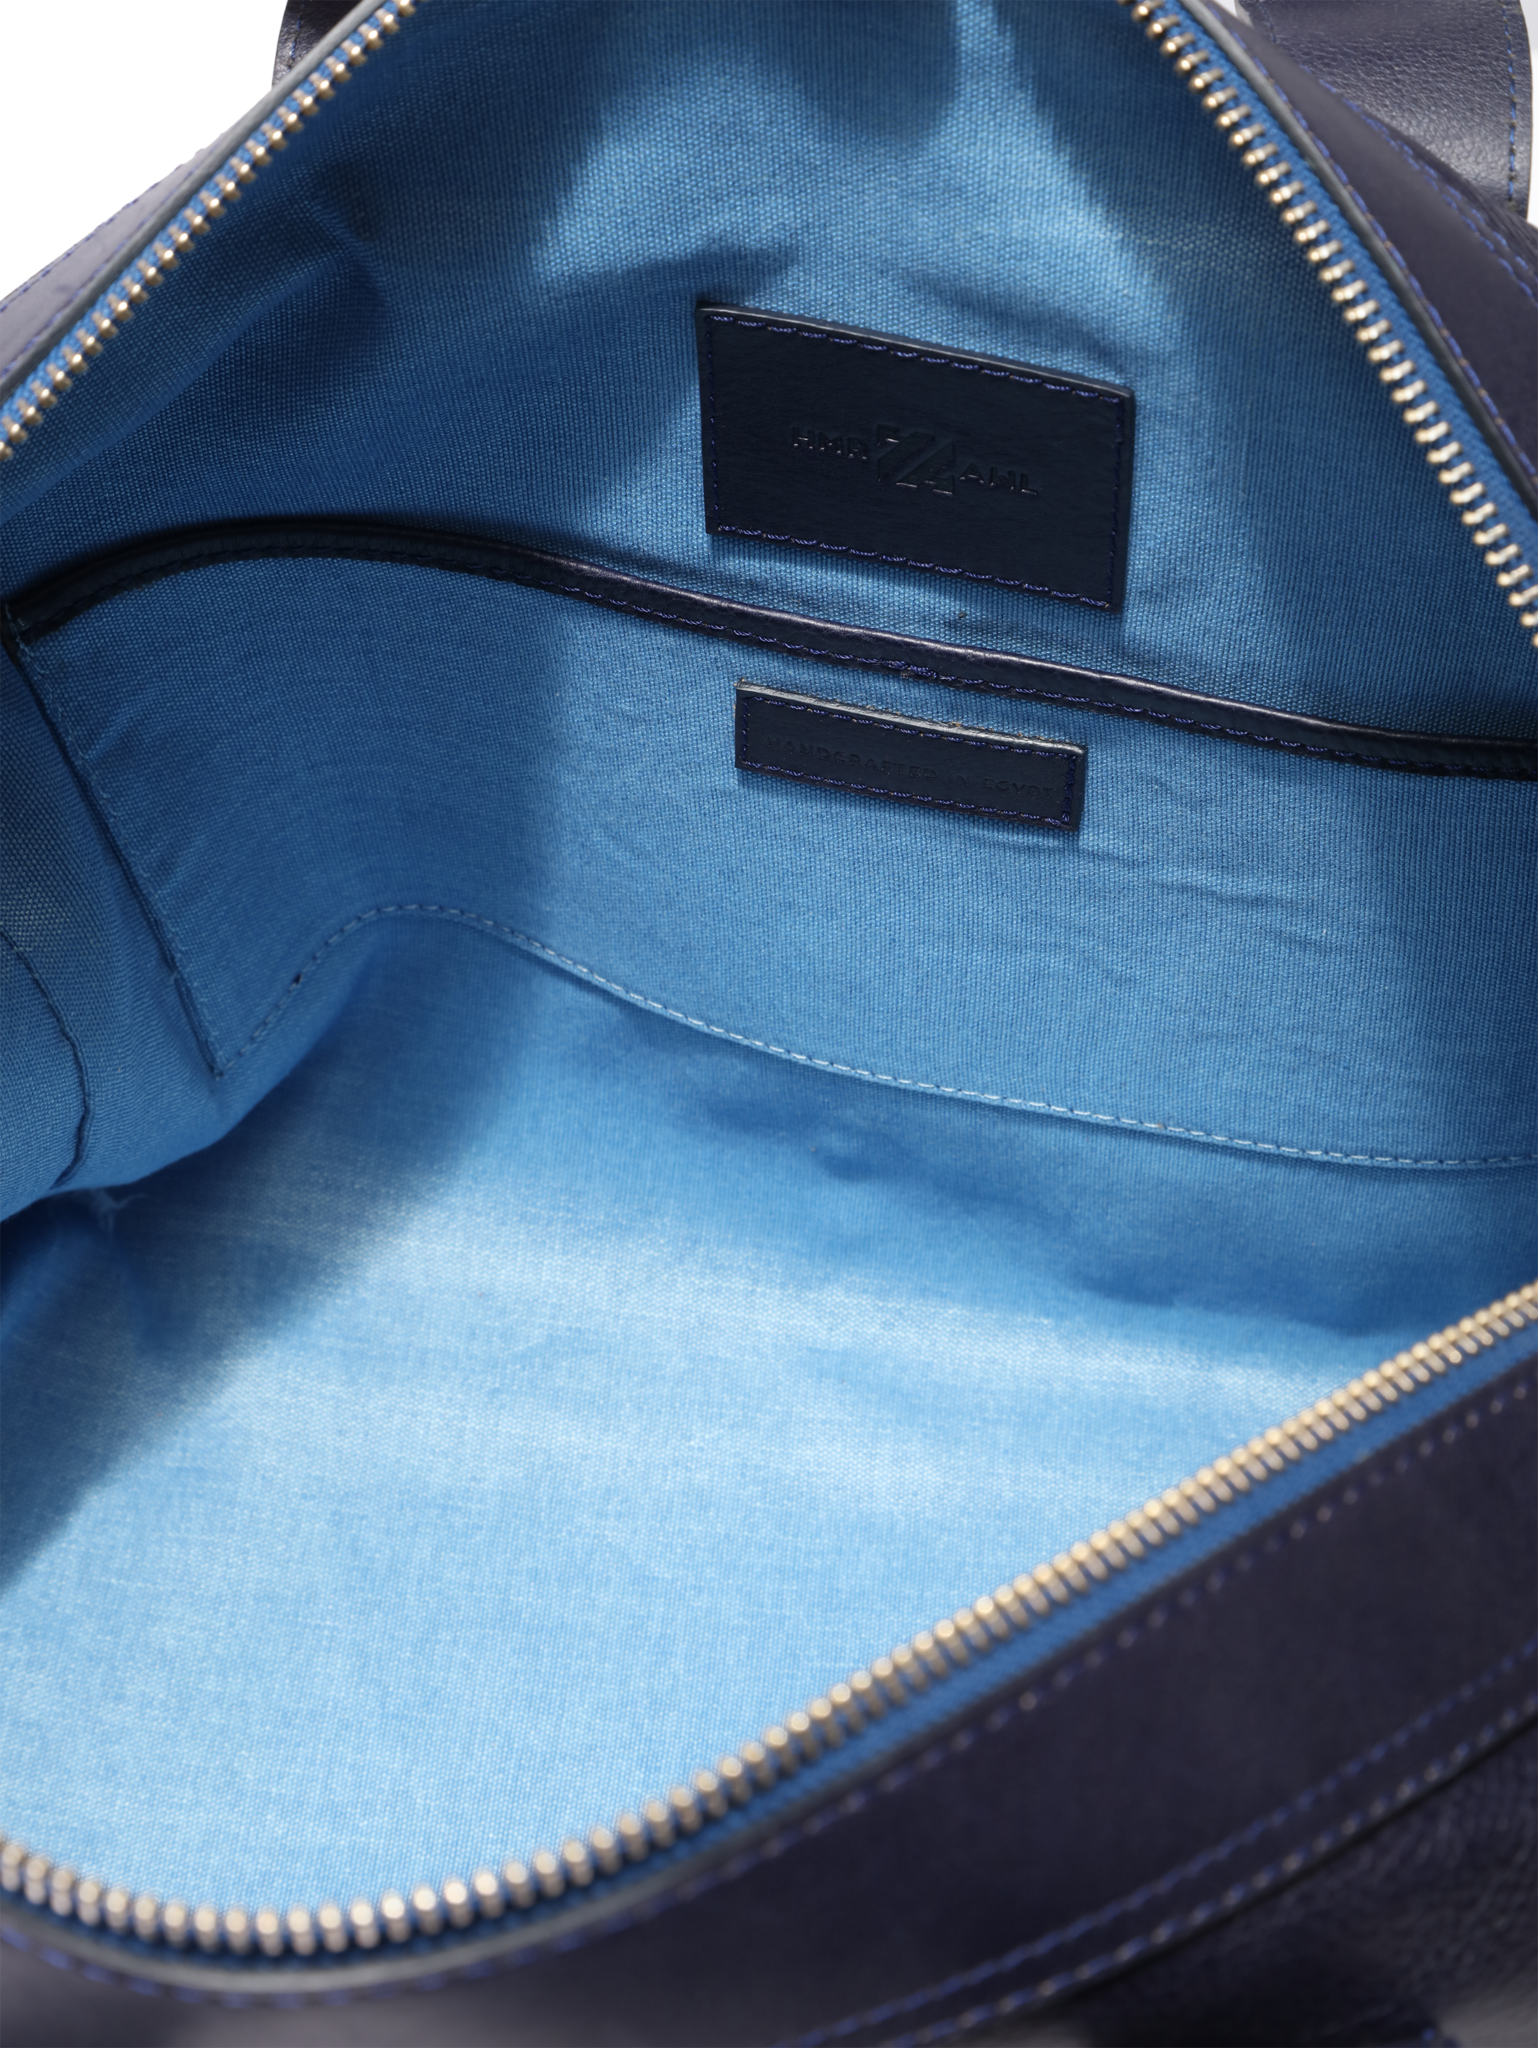 bright blue lining, leather trim pockets